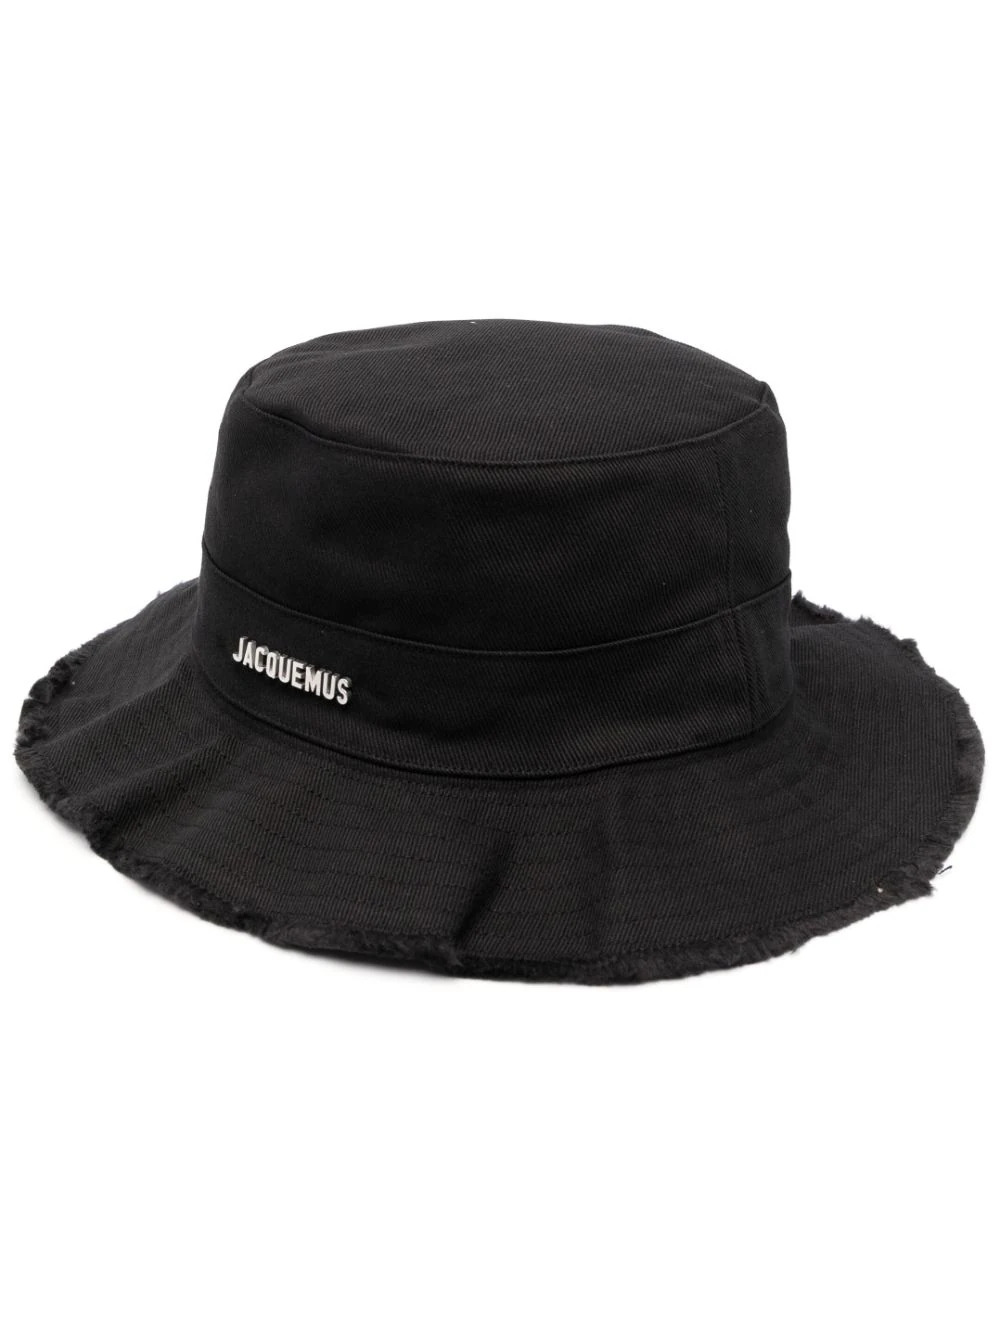 Le bob Artichaut frayed expedition hat